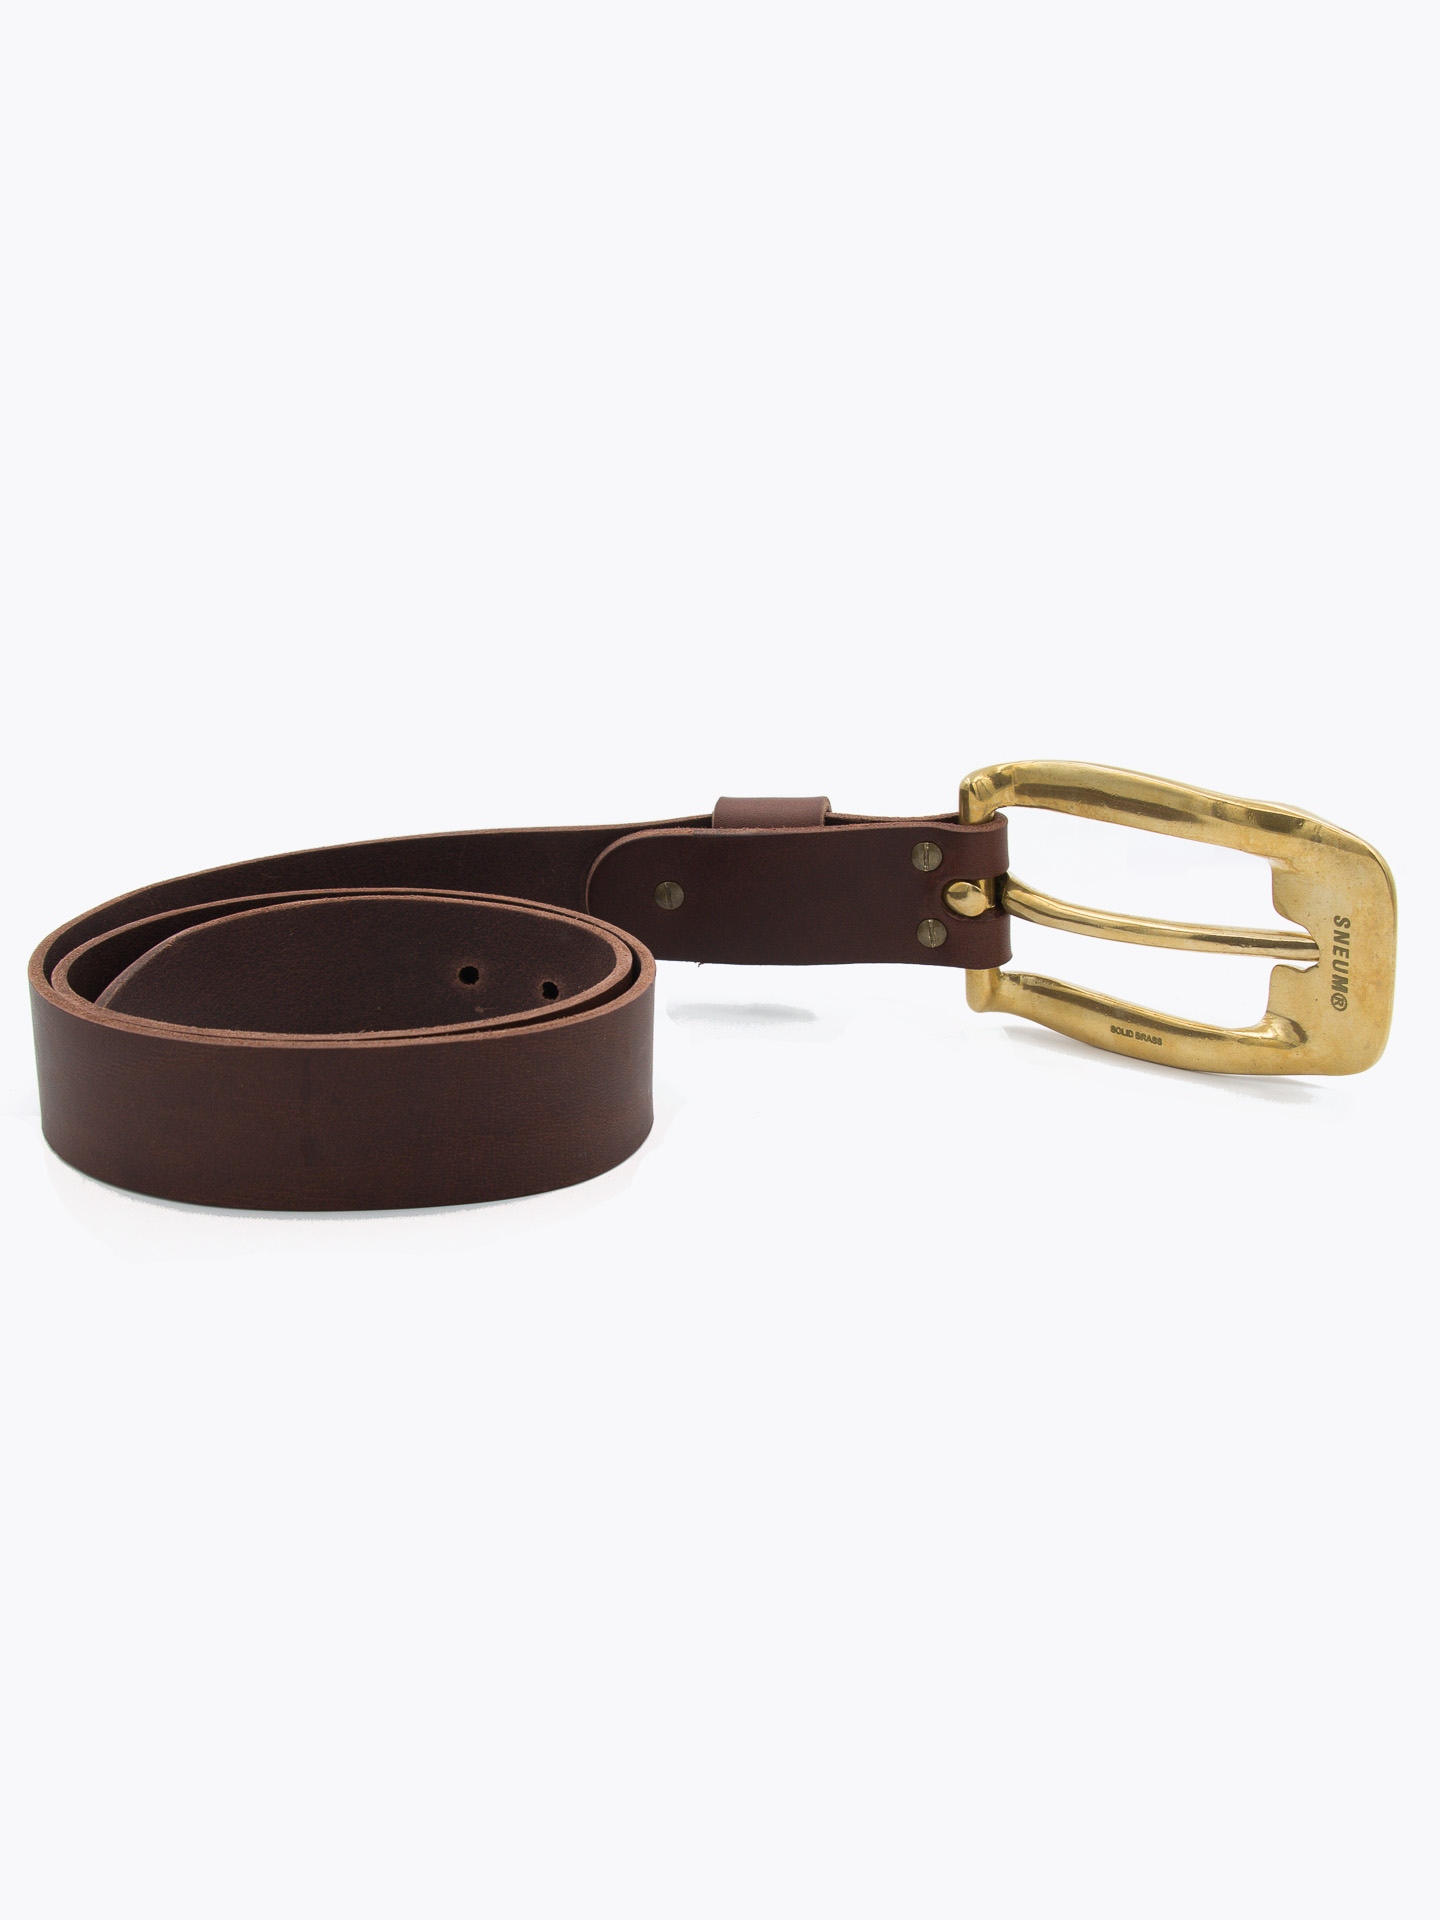 The Hopper Belt Denni Hopper belt Large brass buckle belt The american dreamer Lawrence Schiller